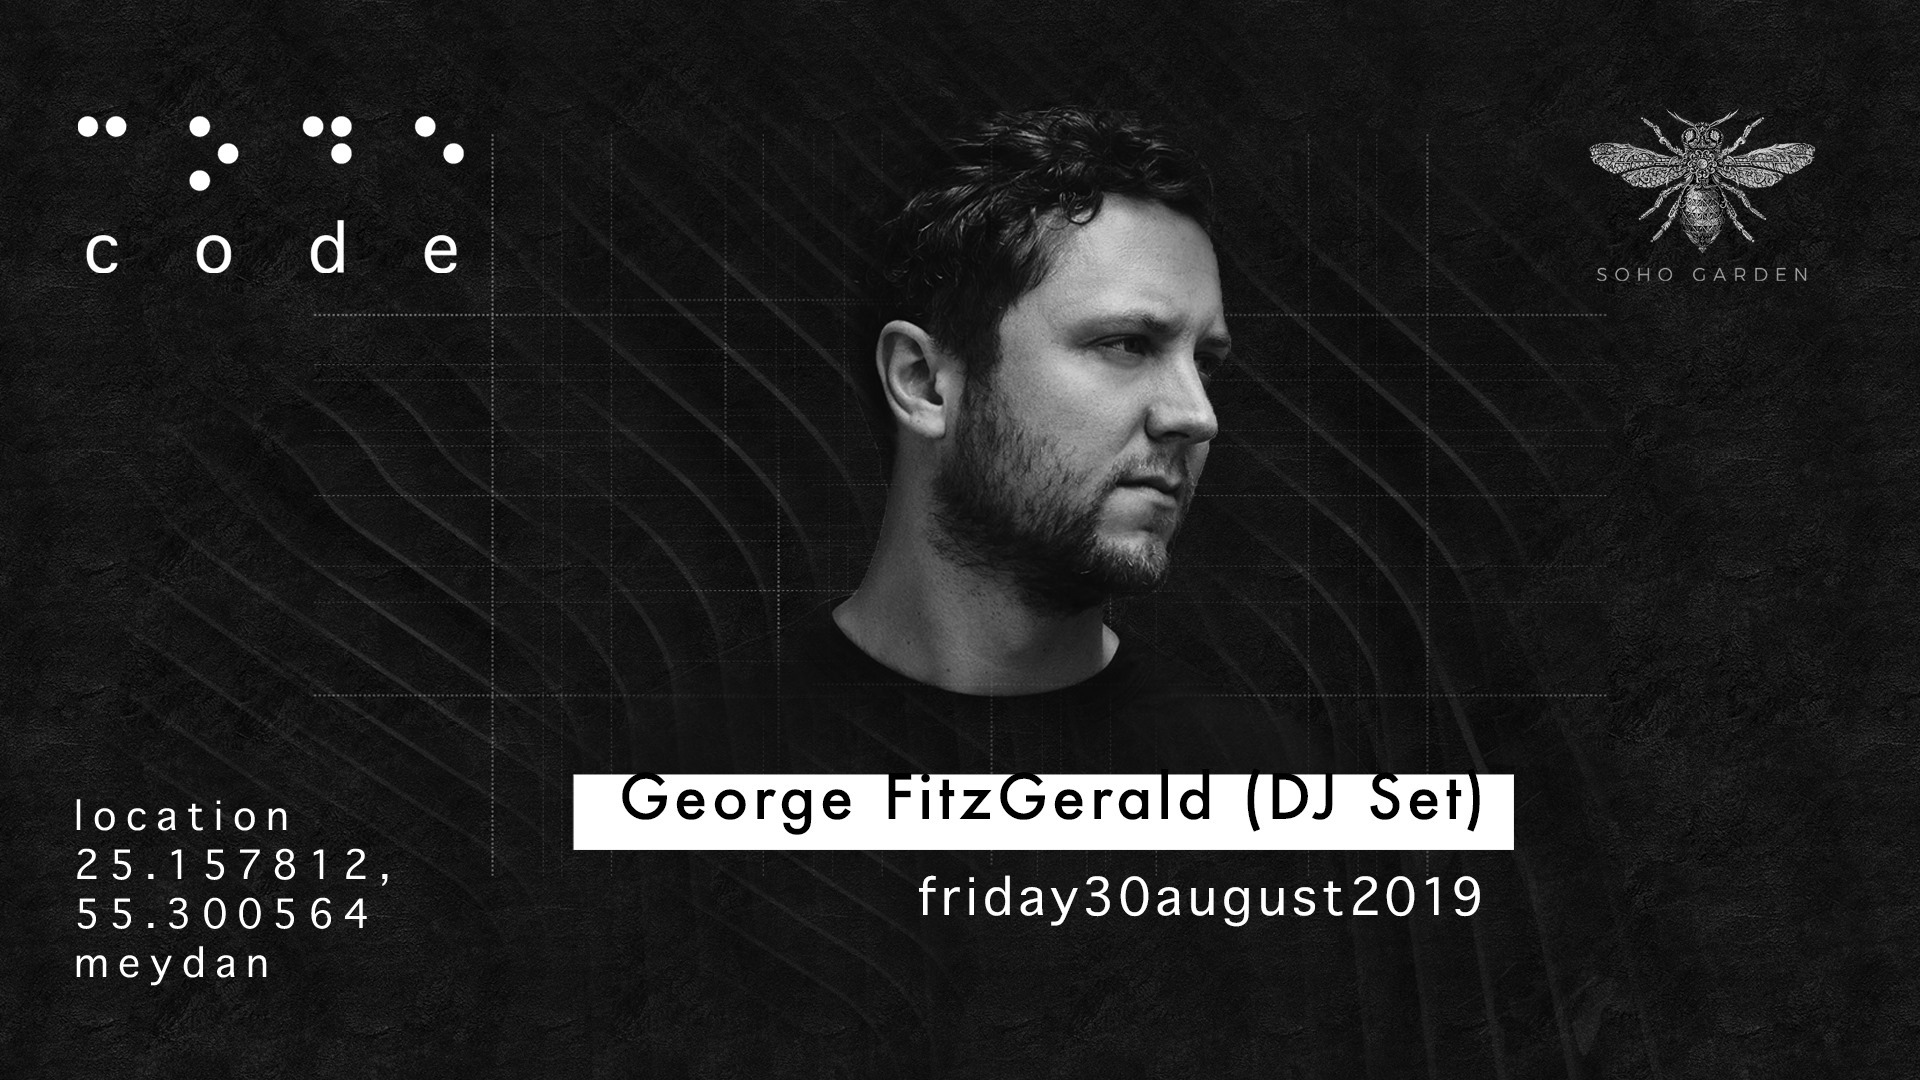 Code DXB – George FitzGerald - Coming Soon in UAE